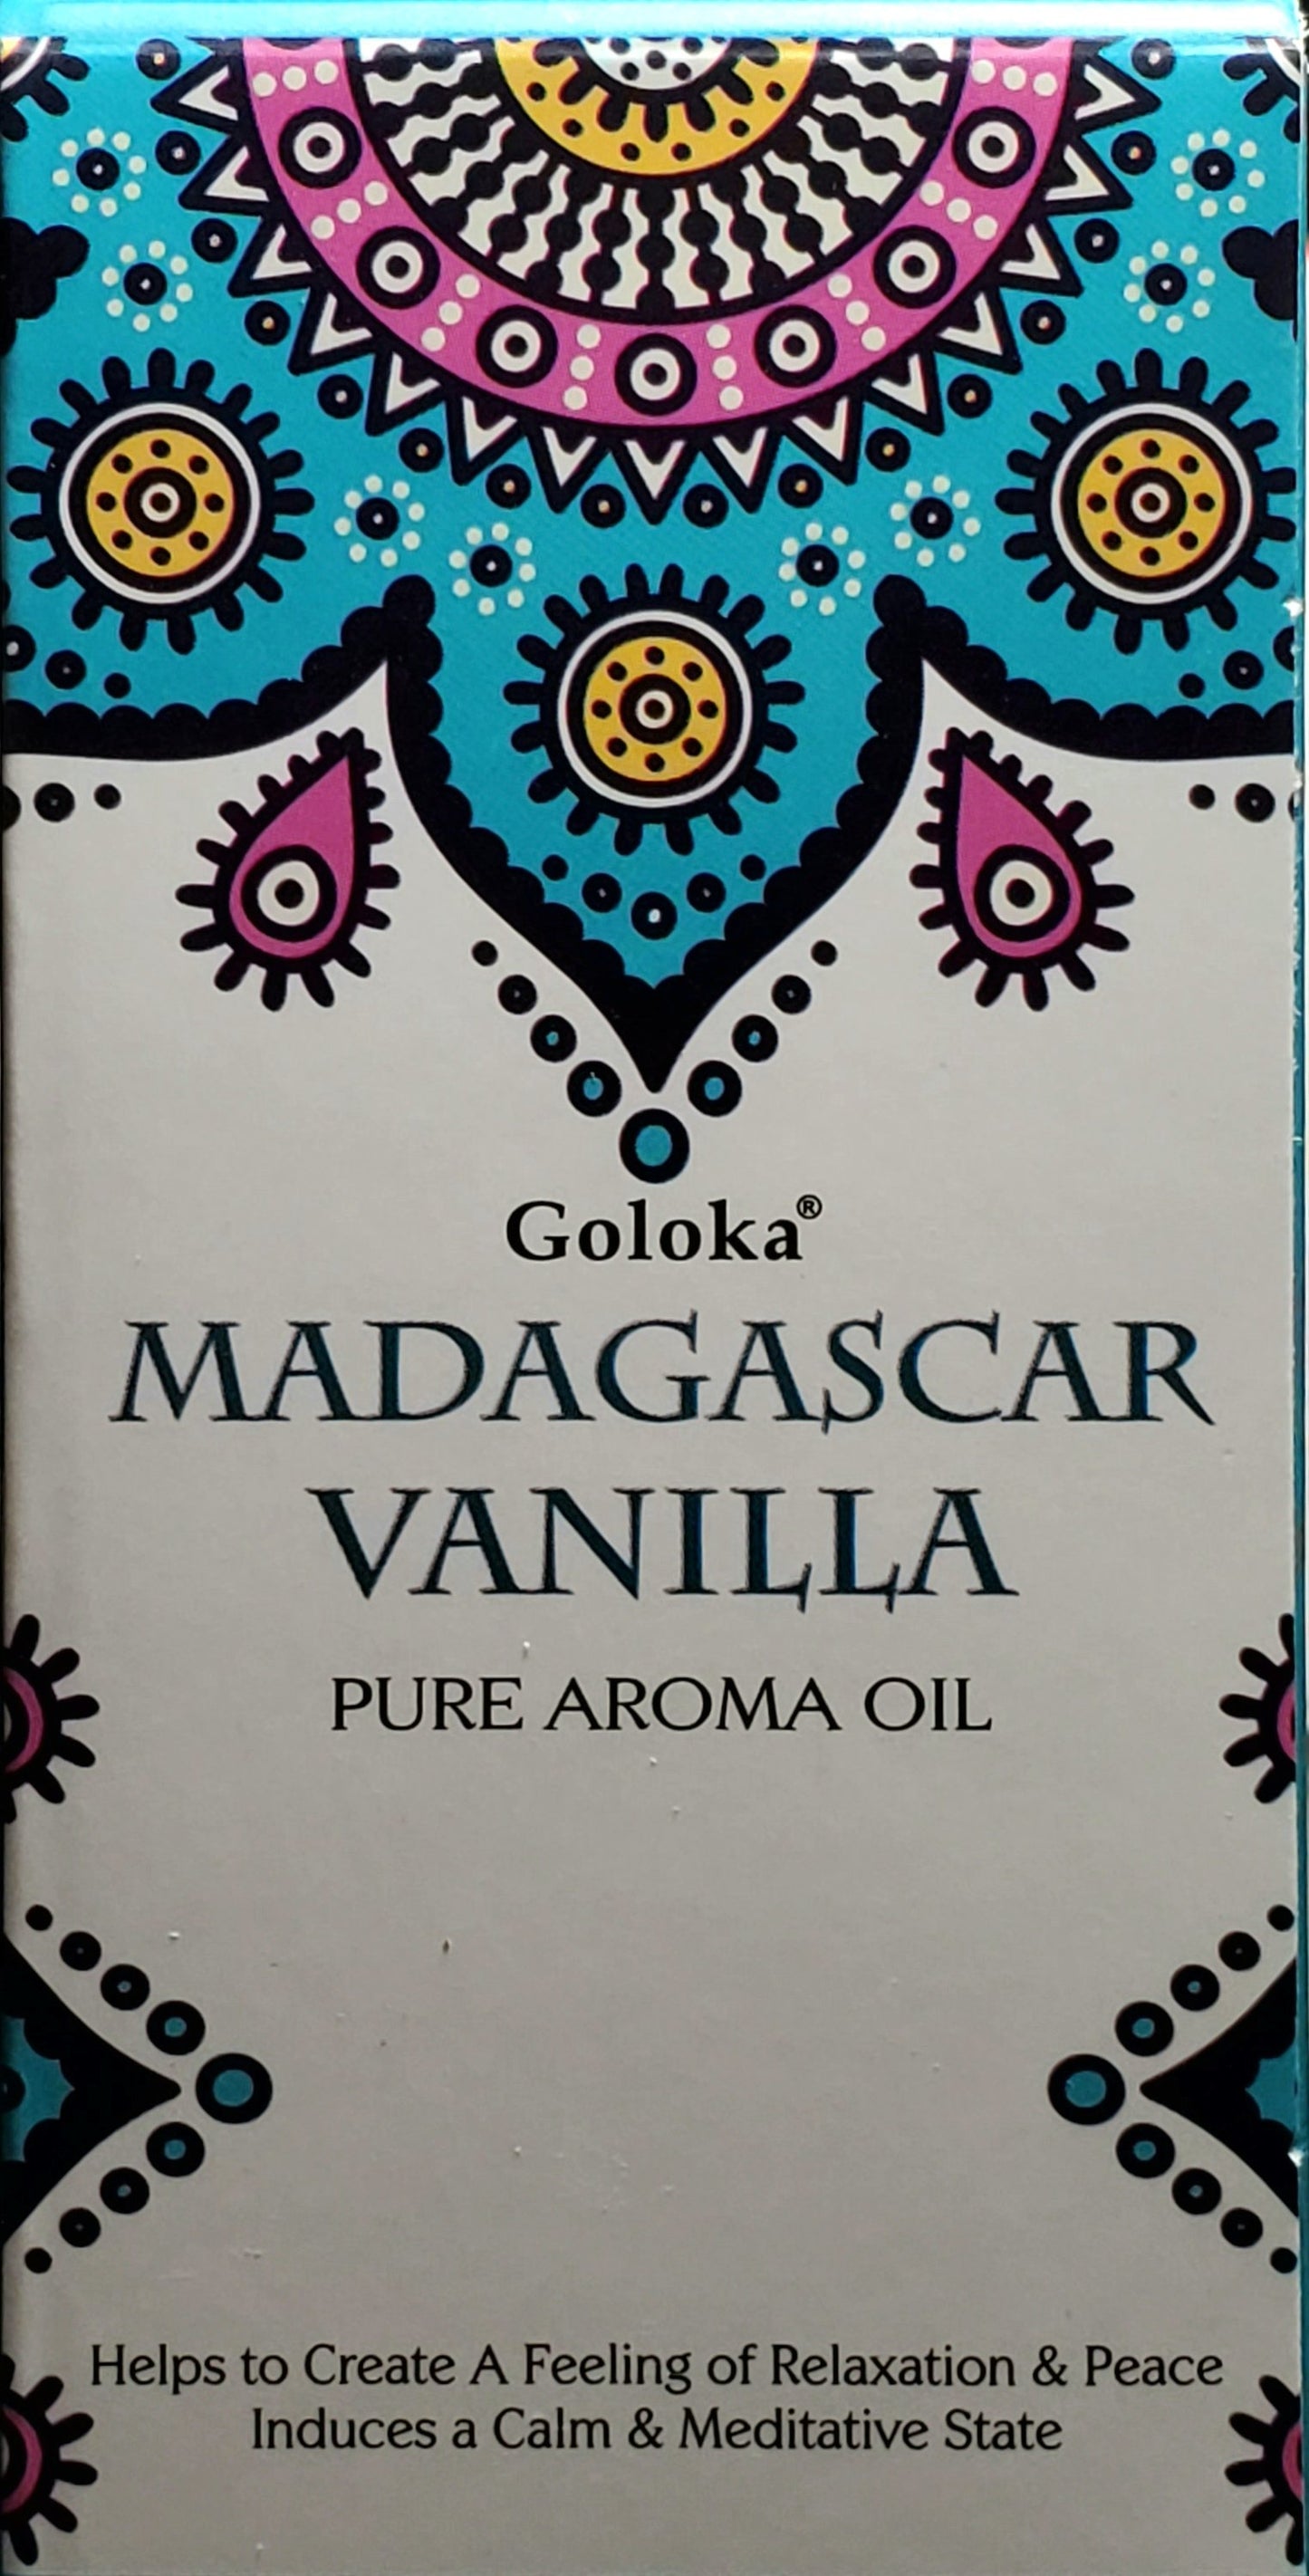 Goloka Natural Aromatherapy Oils | 10 ml Bottle | For Diffuser